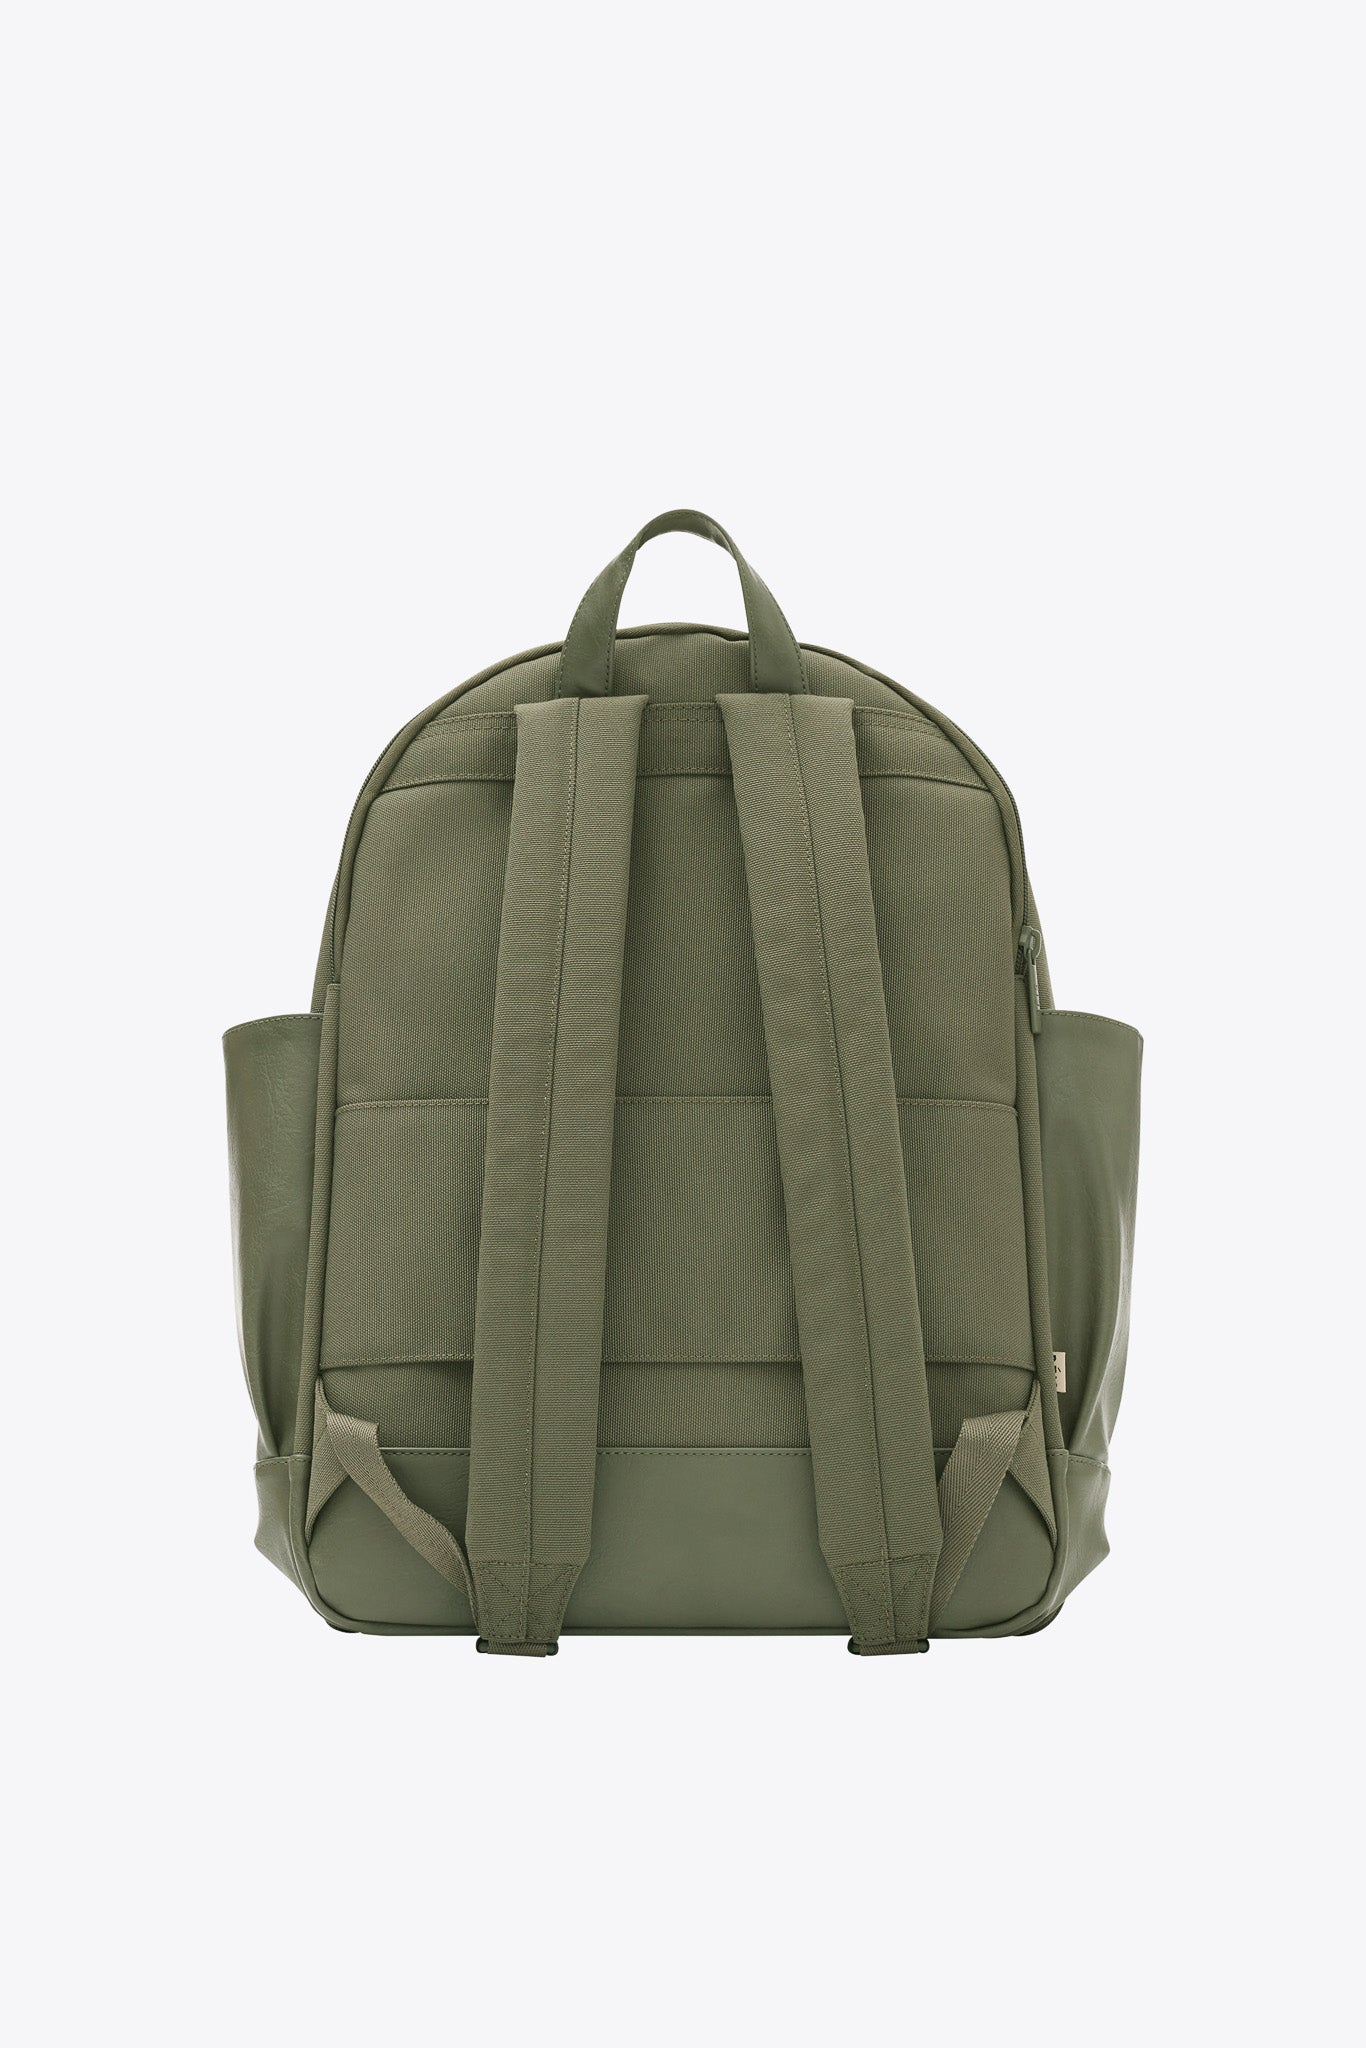 BÉIS 'The Backpack' in Olive - Olive Green Travel Backpack & Computer ...